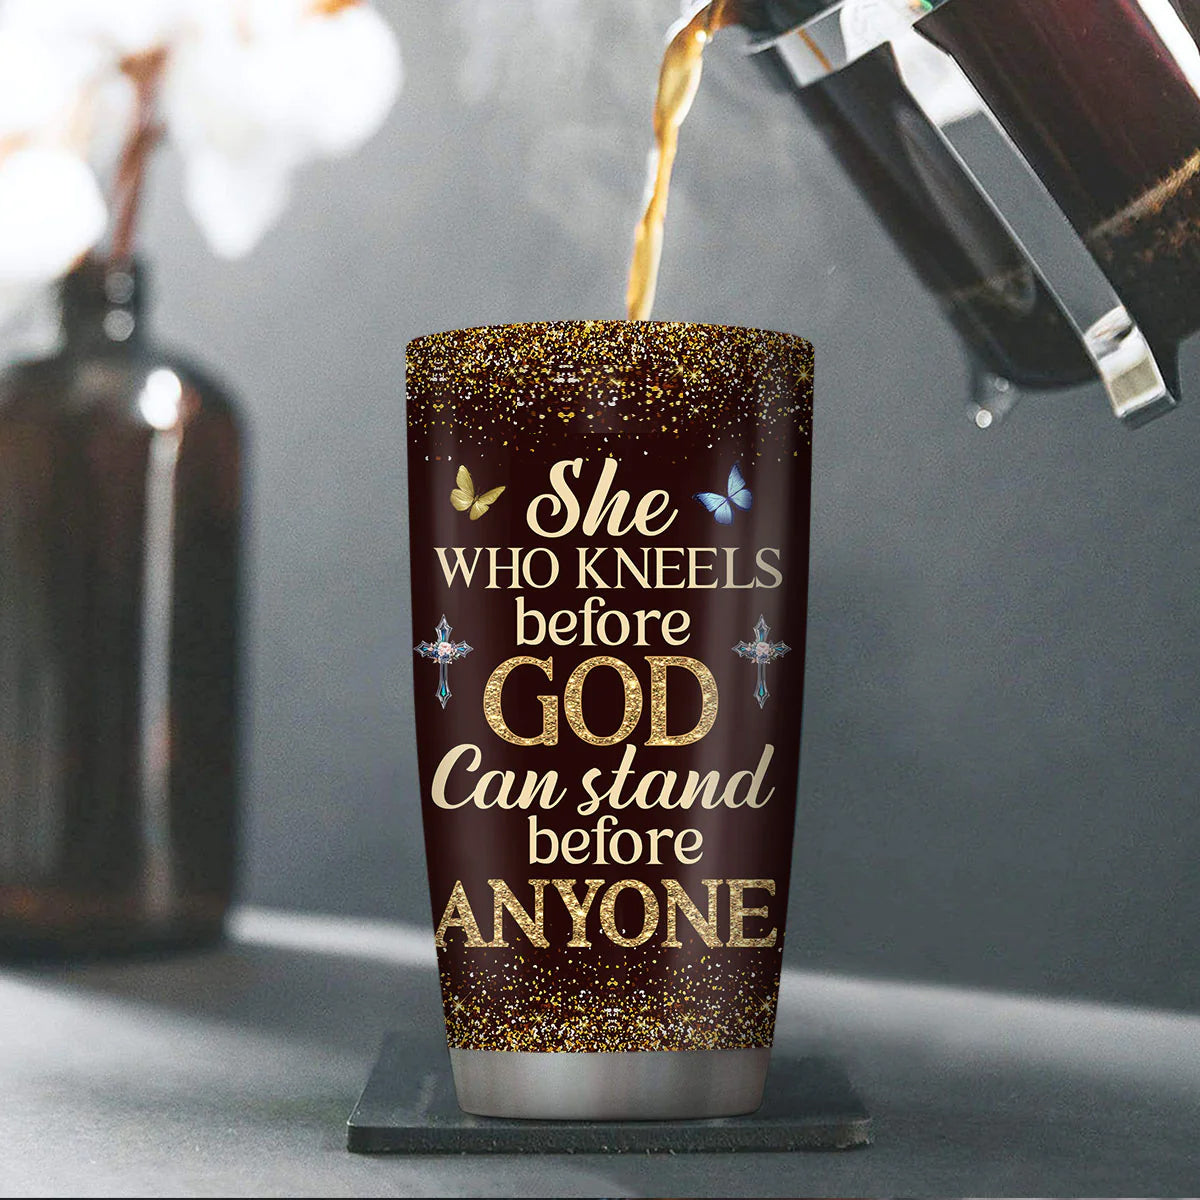 Christianartbag Drinkware, She Who Kneels Before Can Stand Before Anyone, Personalized Mug, Tumbler, Christmas Gift. - Christian Art Bag